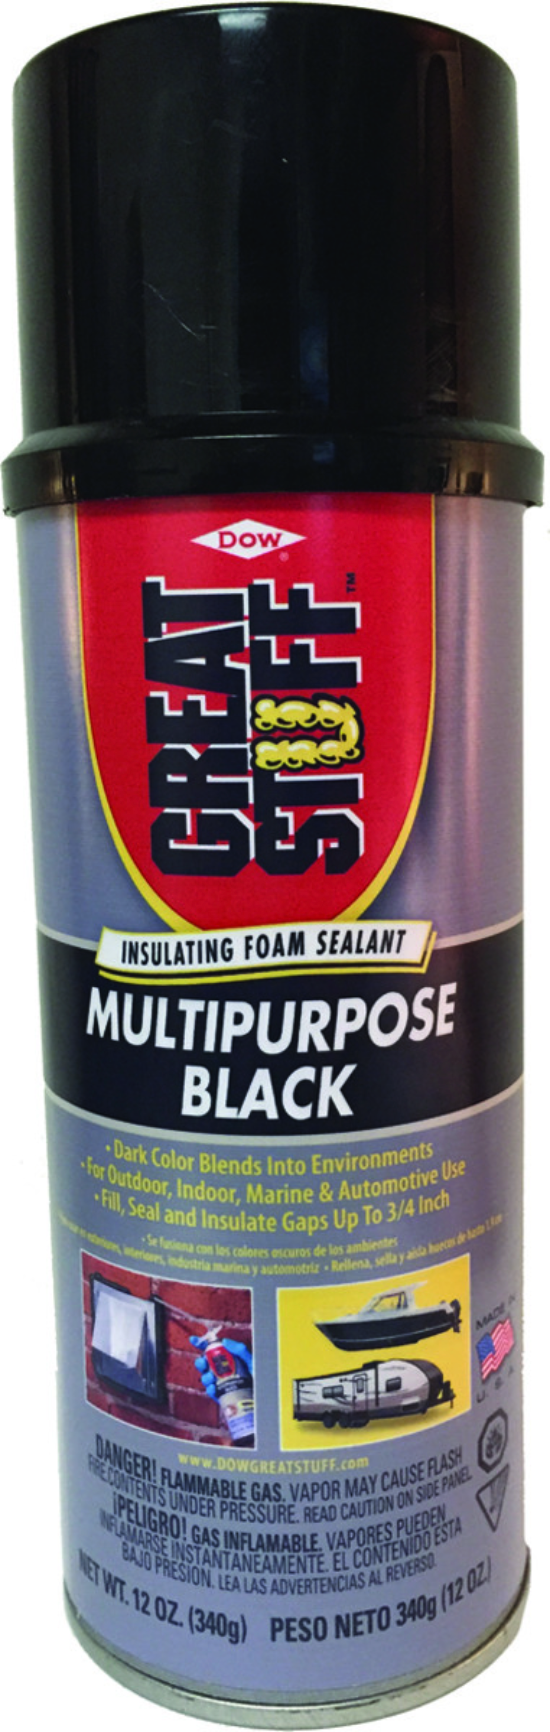 Multipurpose Black Polyurethane Foam Insulating Sealant - 12 Oz